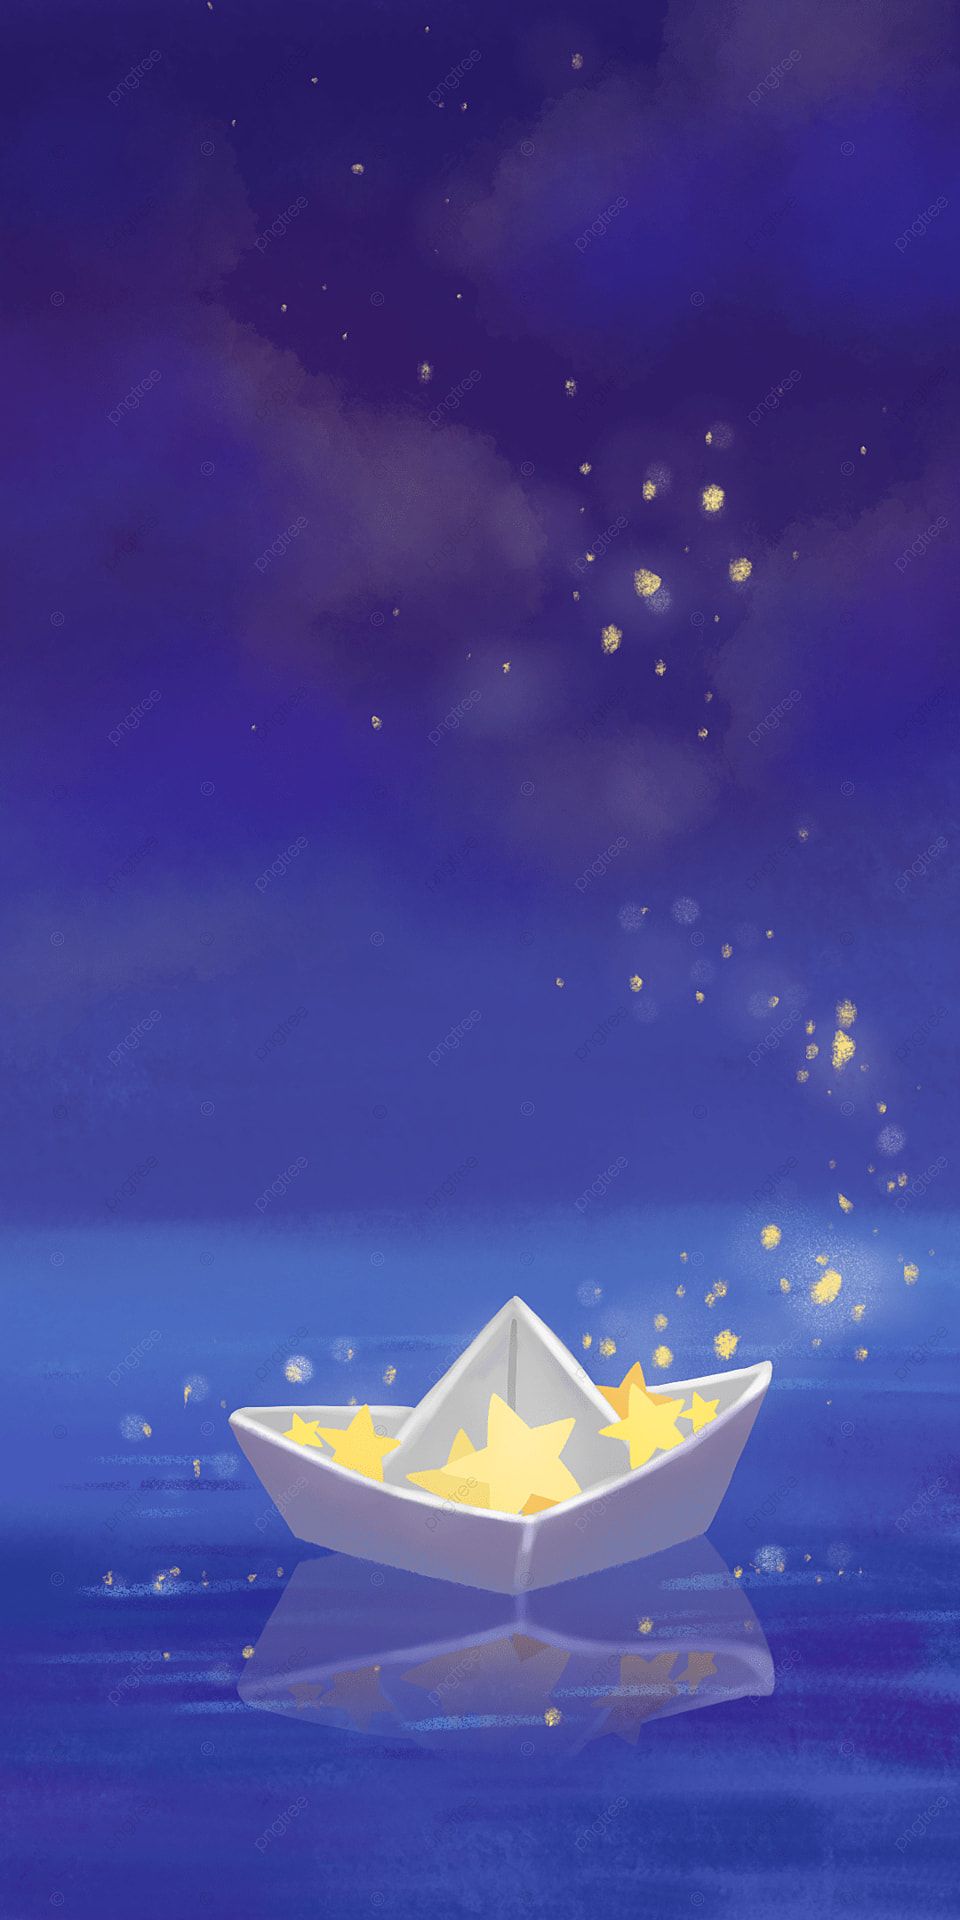 Star Paper Ship Dream Sky Fantasy Mobile Phone Wallpaper Background